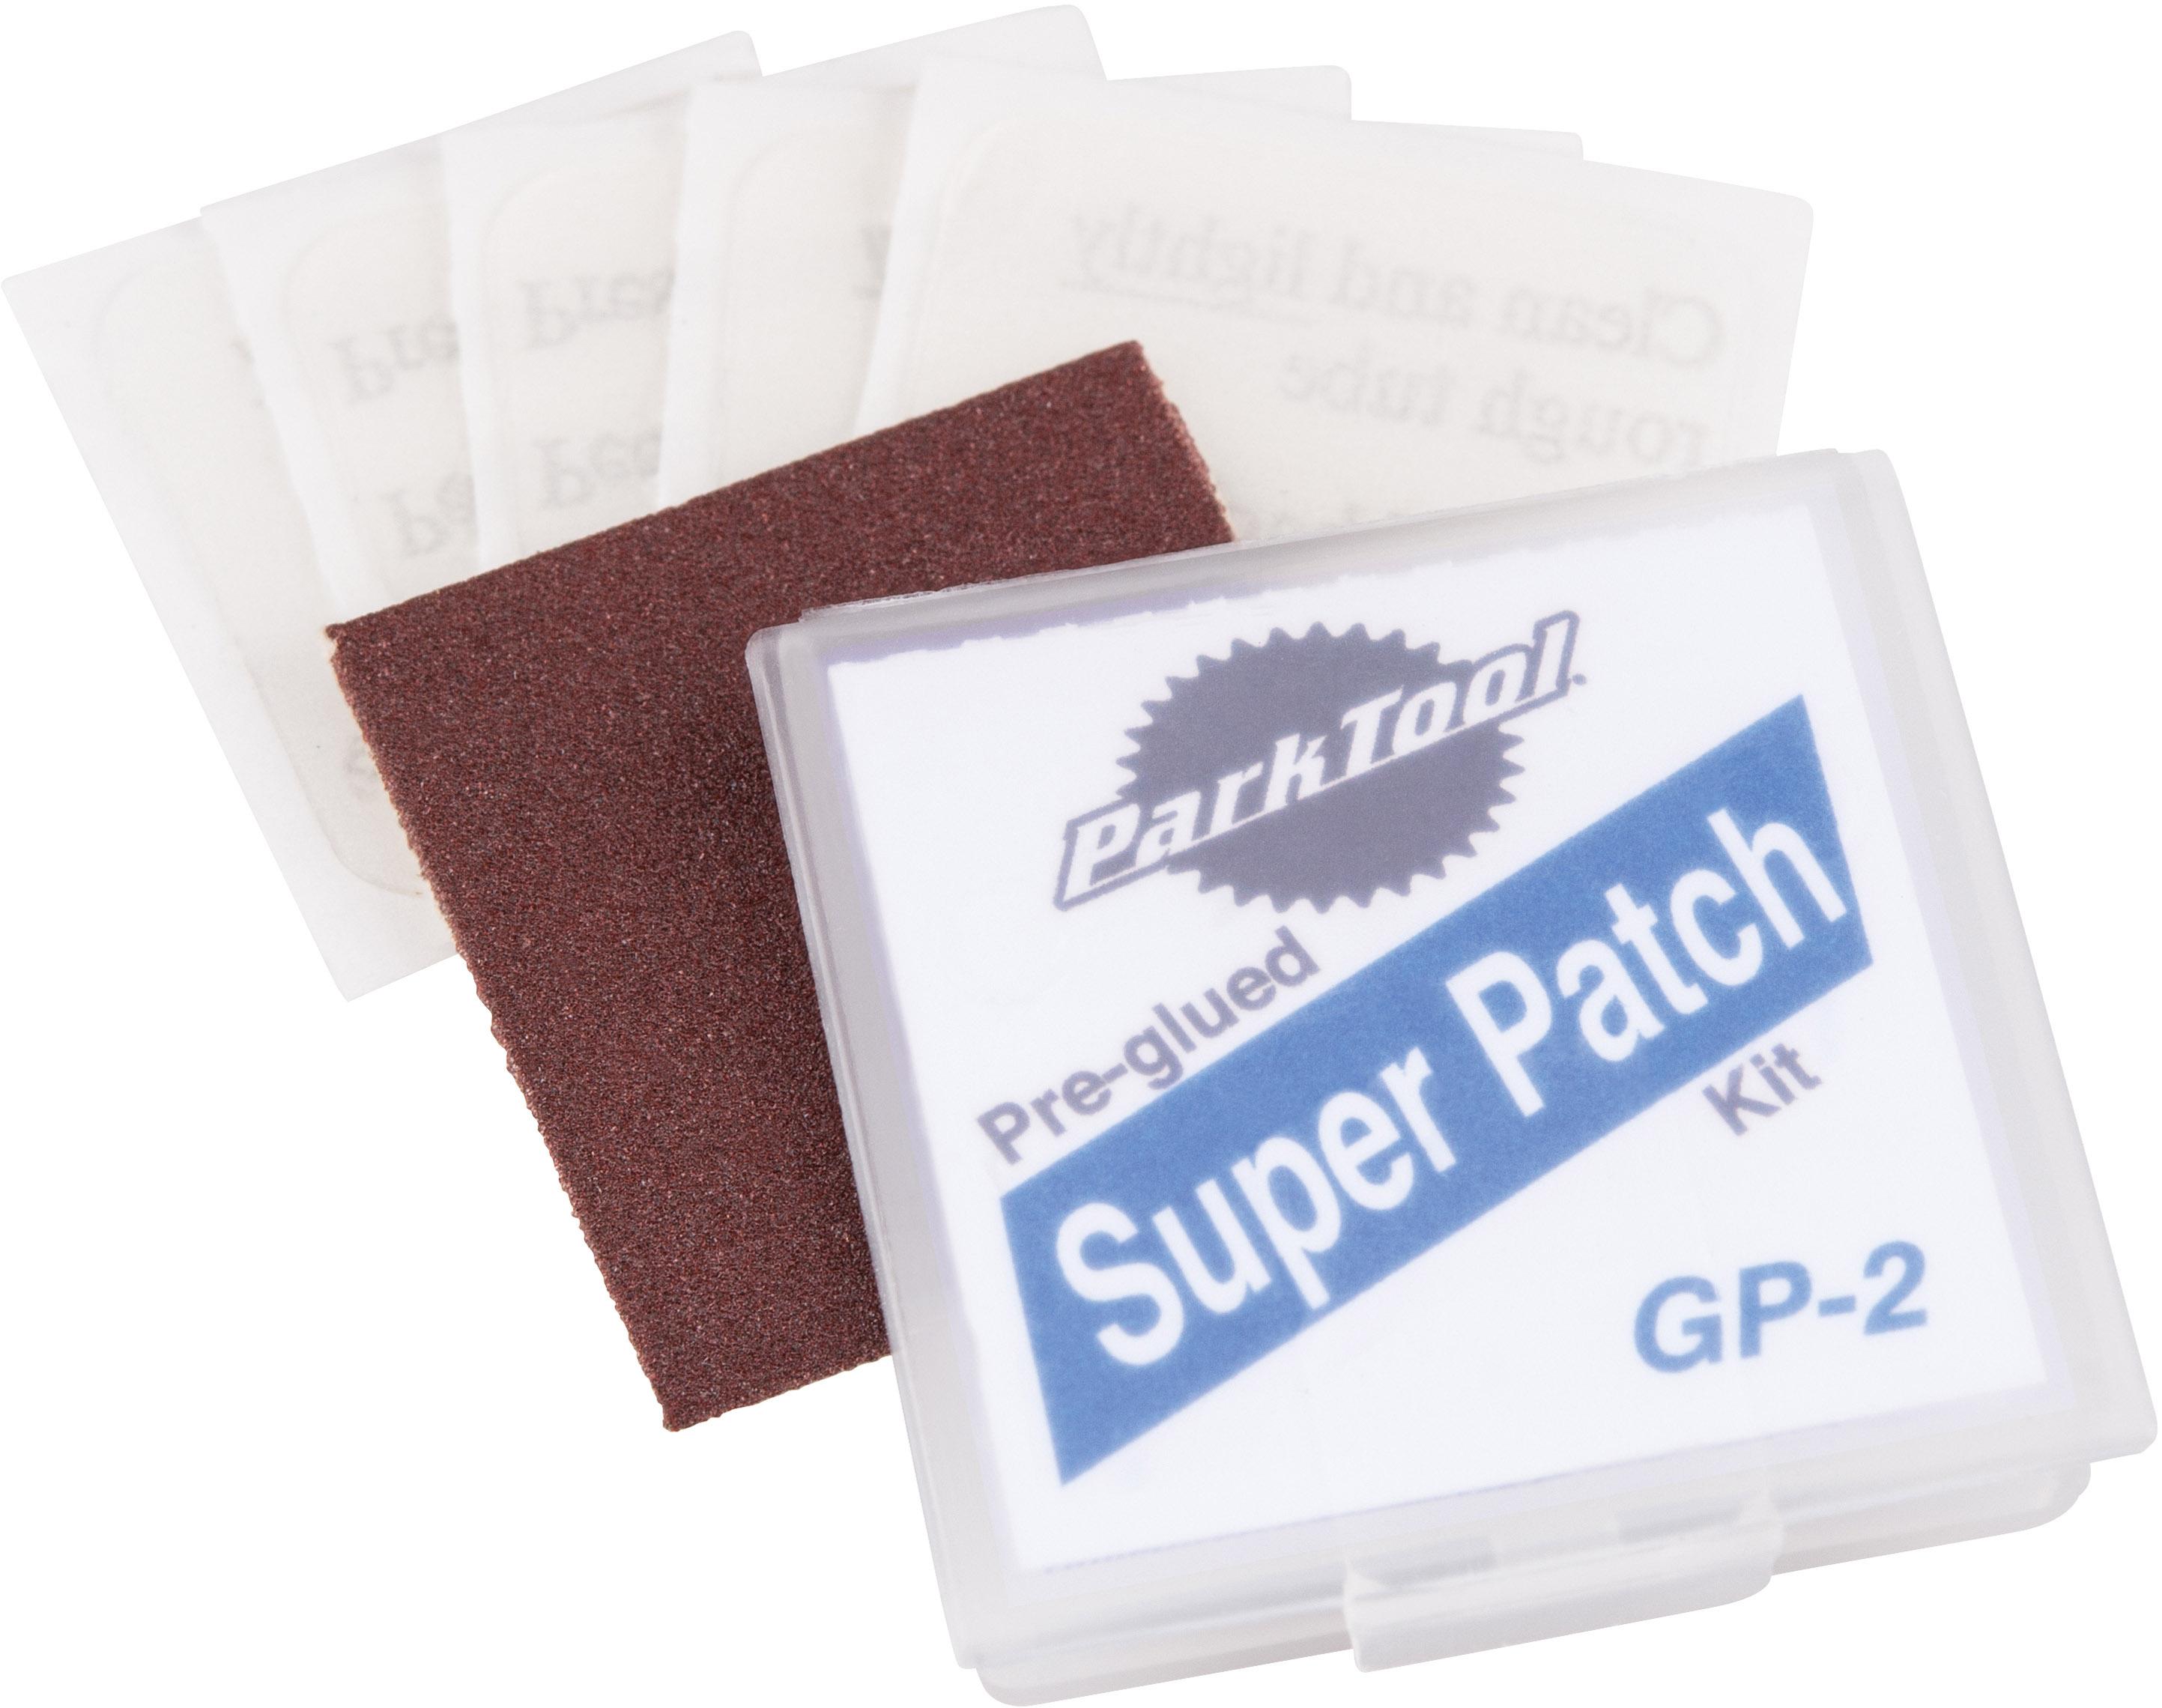 Park Tool Puncture Repair Kit Super Patch Gp-2 - Black/transparent